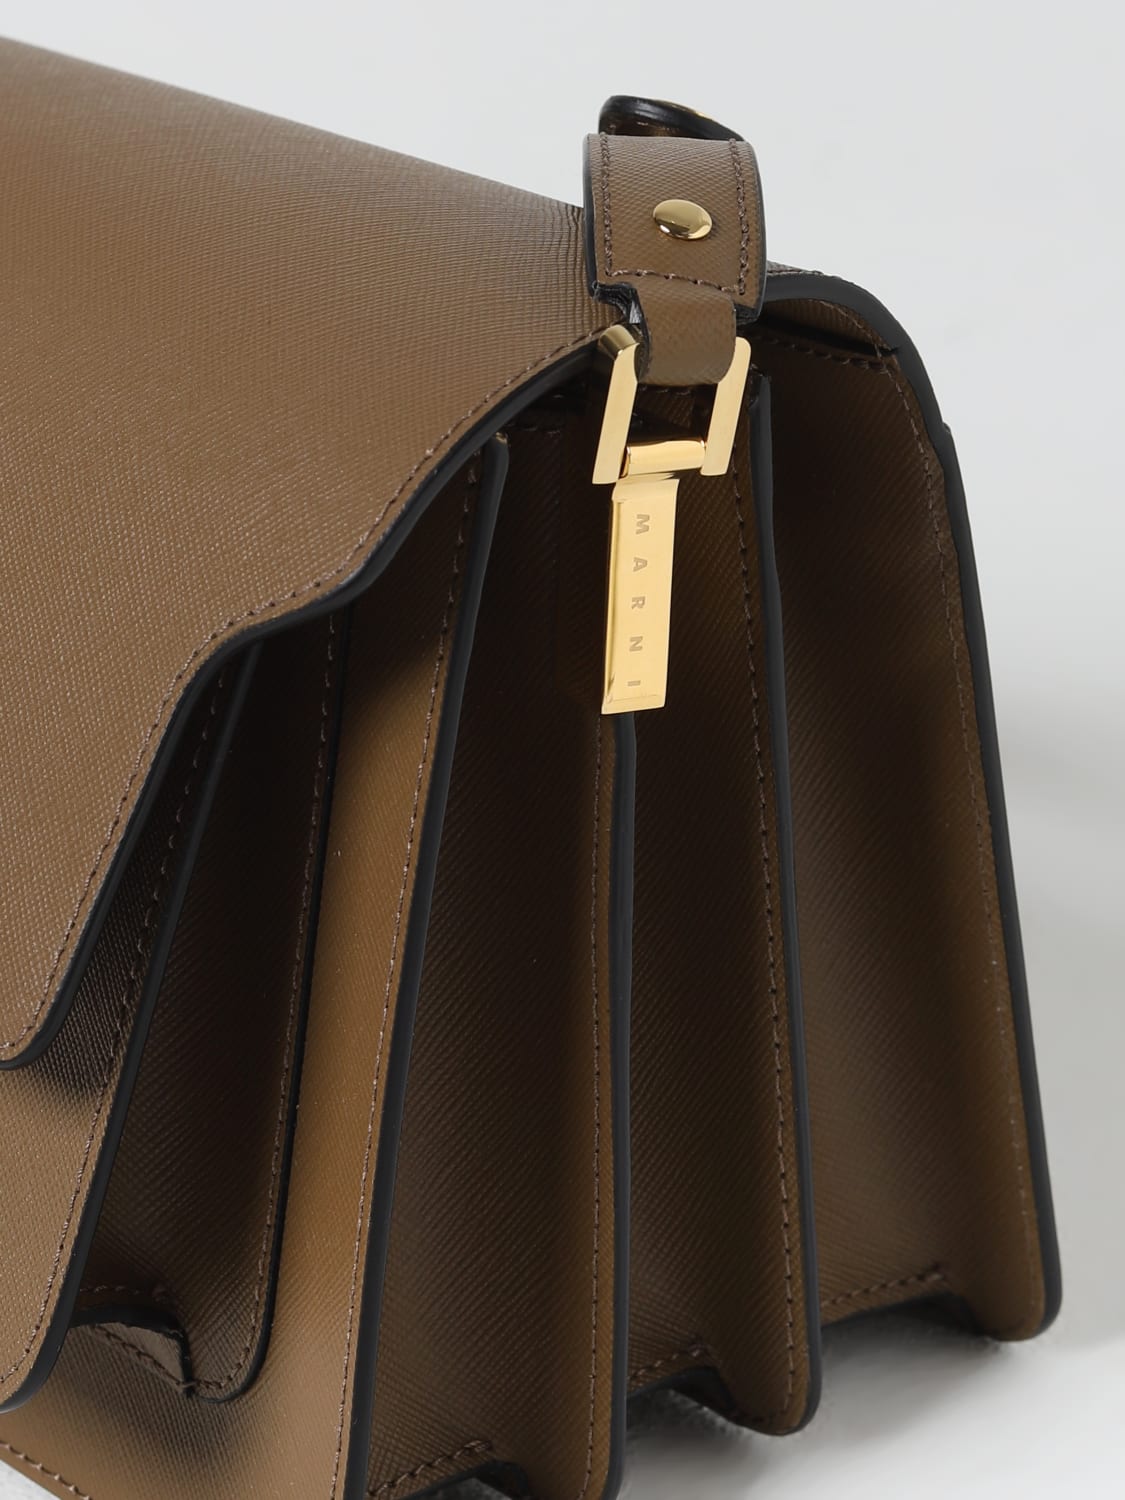 Marni Women's Medium Saffiano Leather Trunk Bag